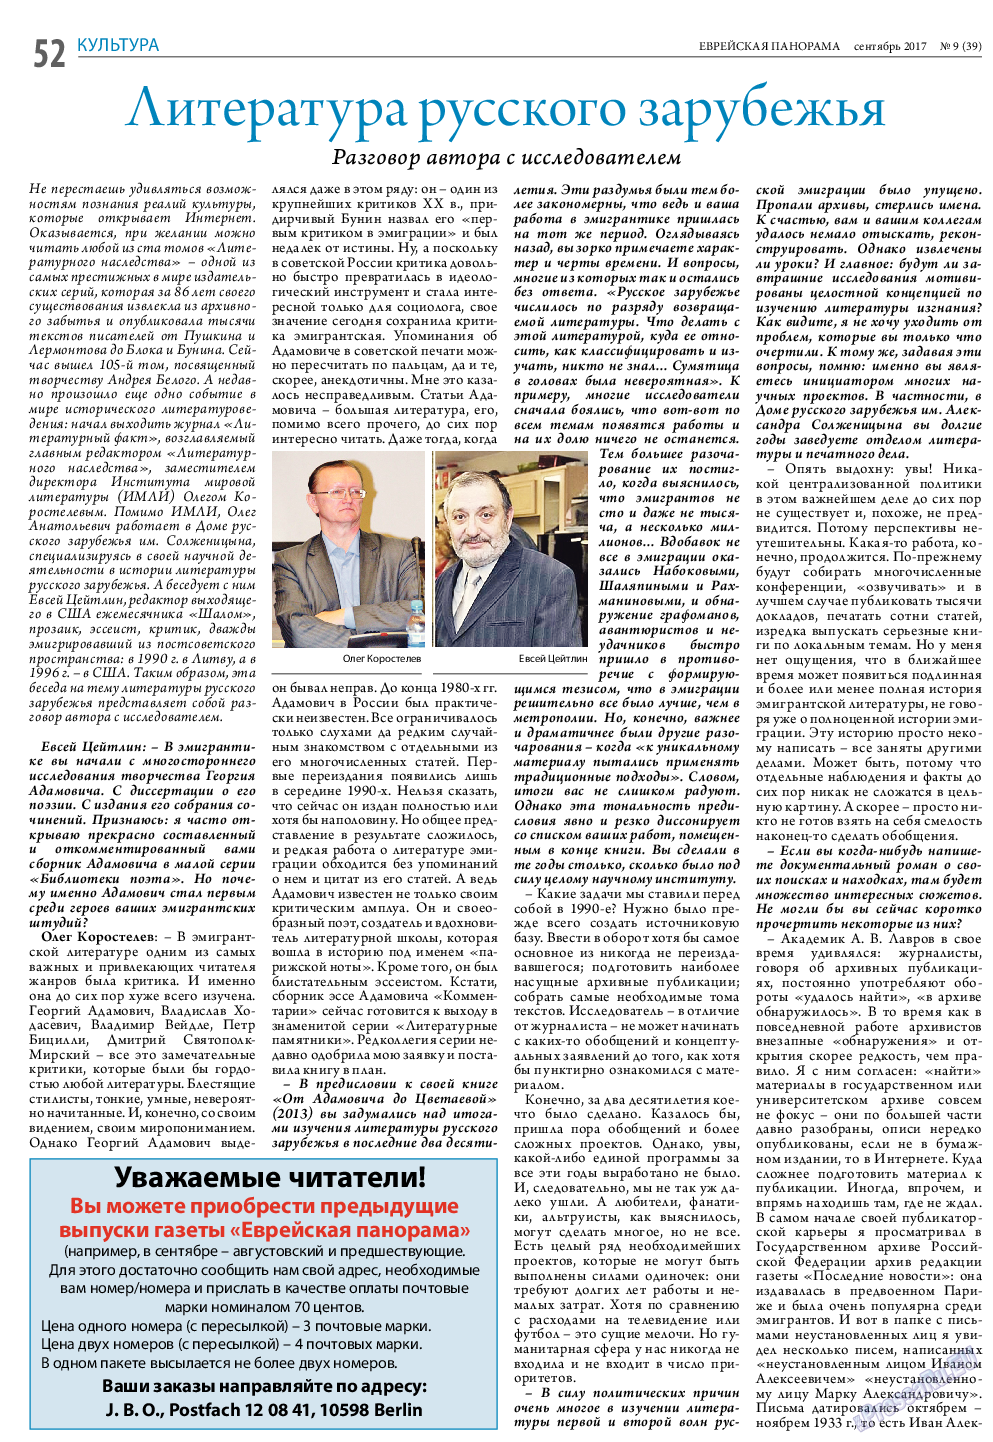 Еврейская панорама, газета. 2017 №9 стр.52